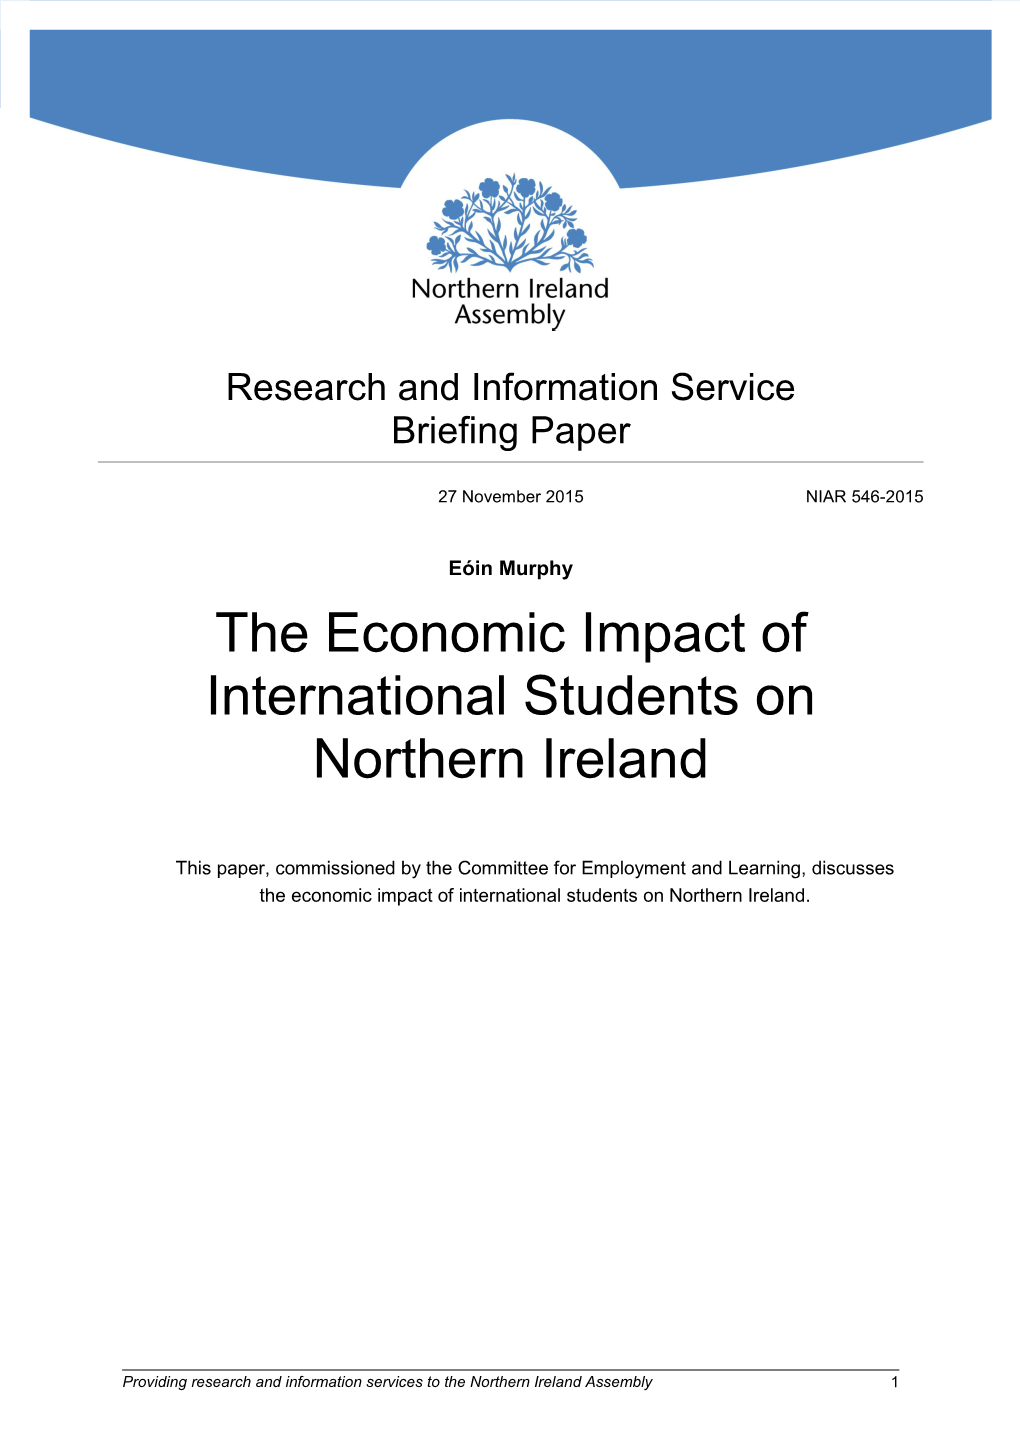 The Economic Impact of International Students on Northern Ireland